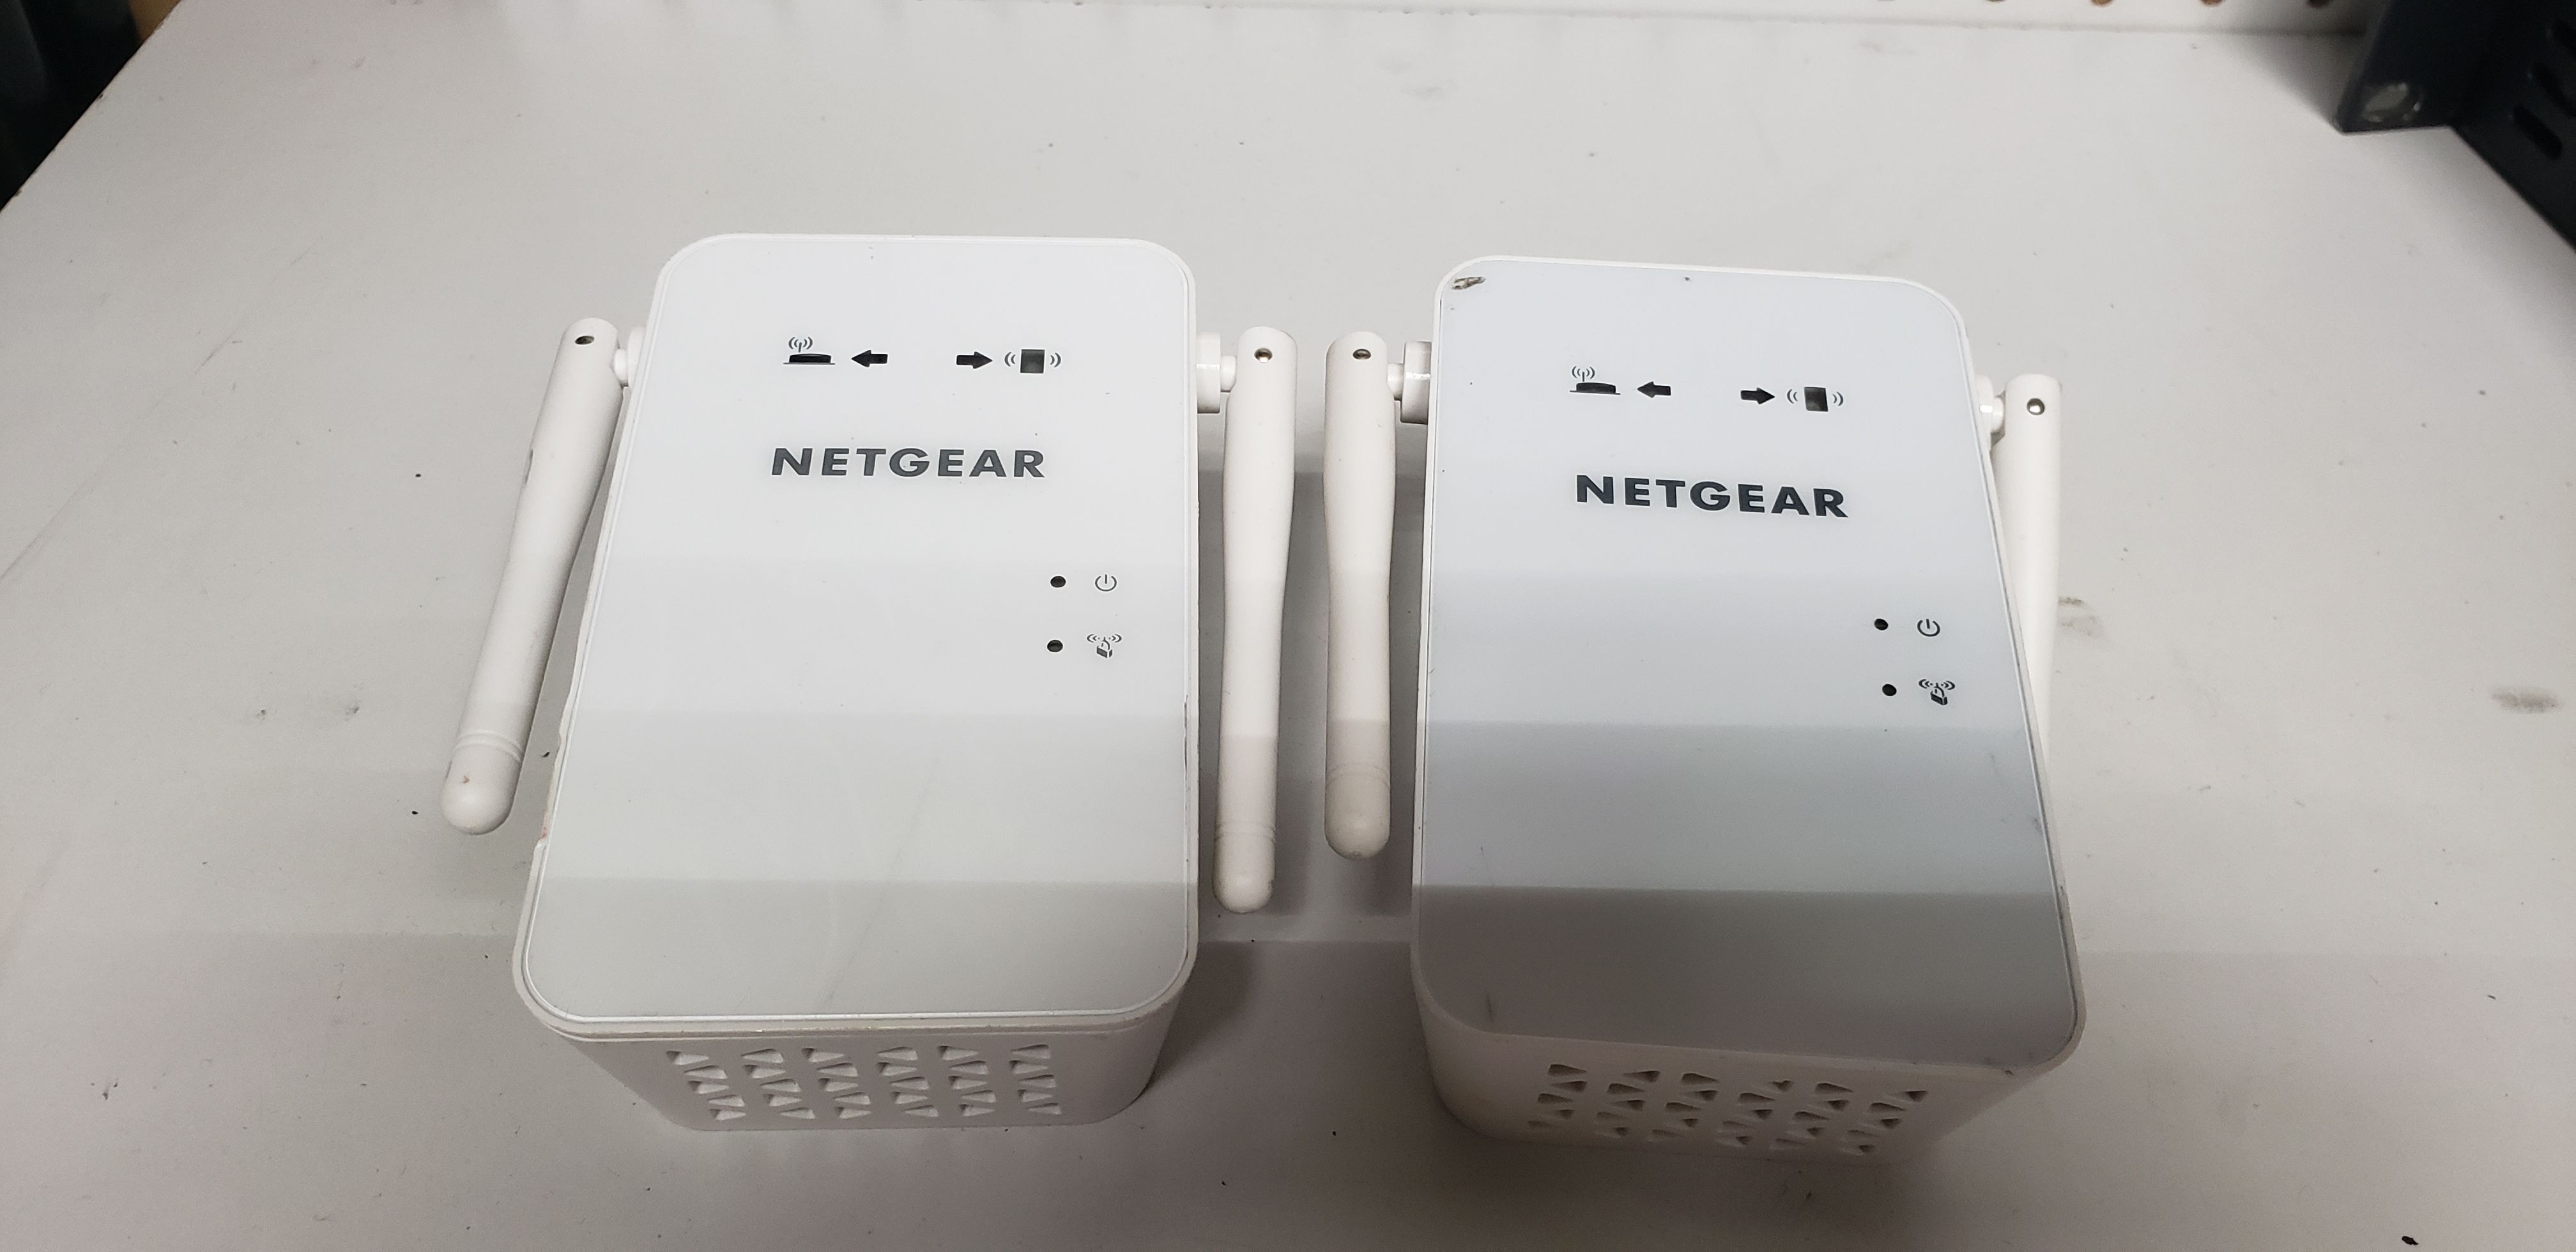 Netgear wi-fi range extender model EX6100